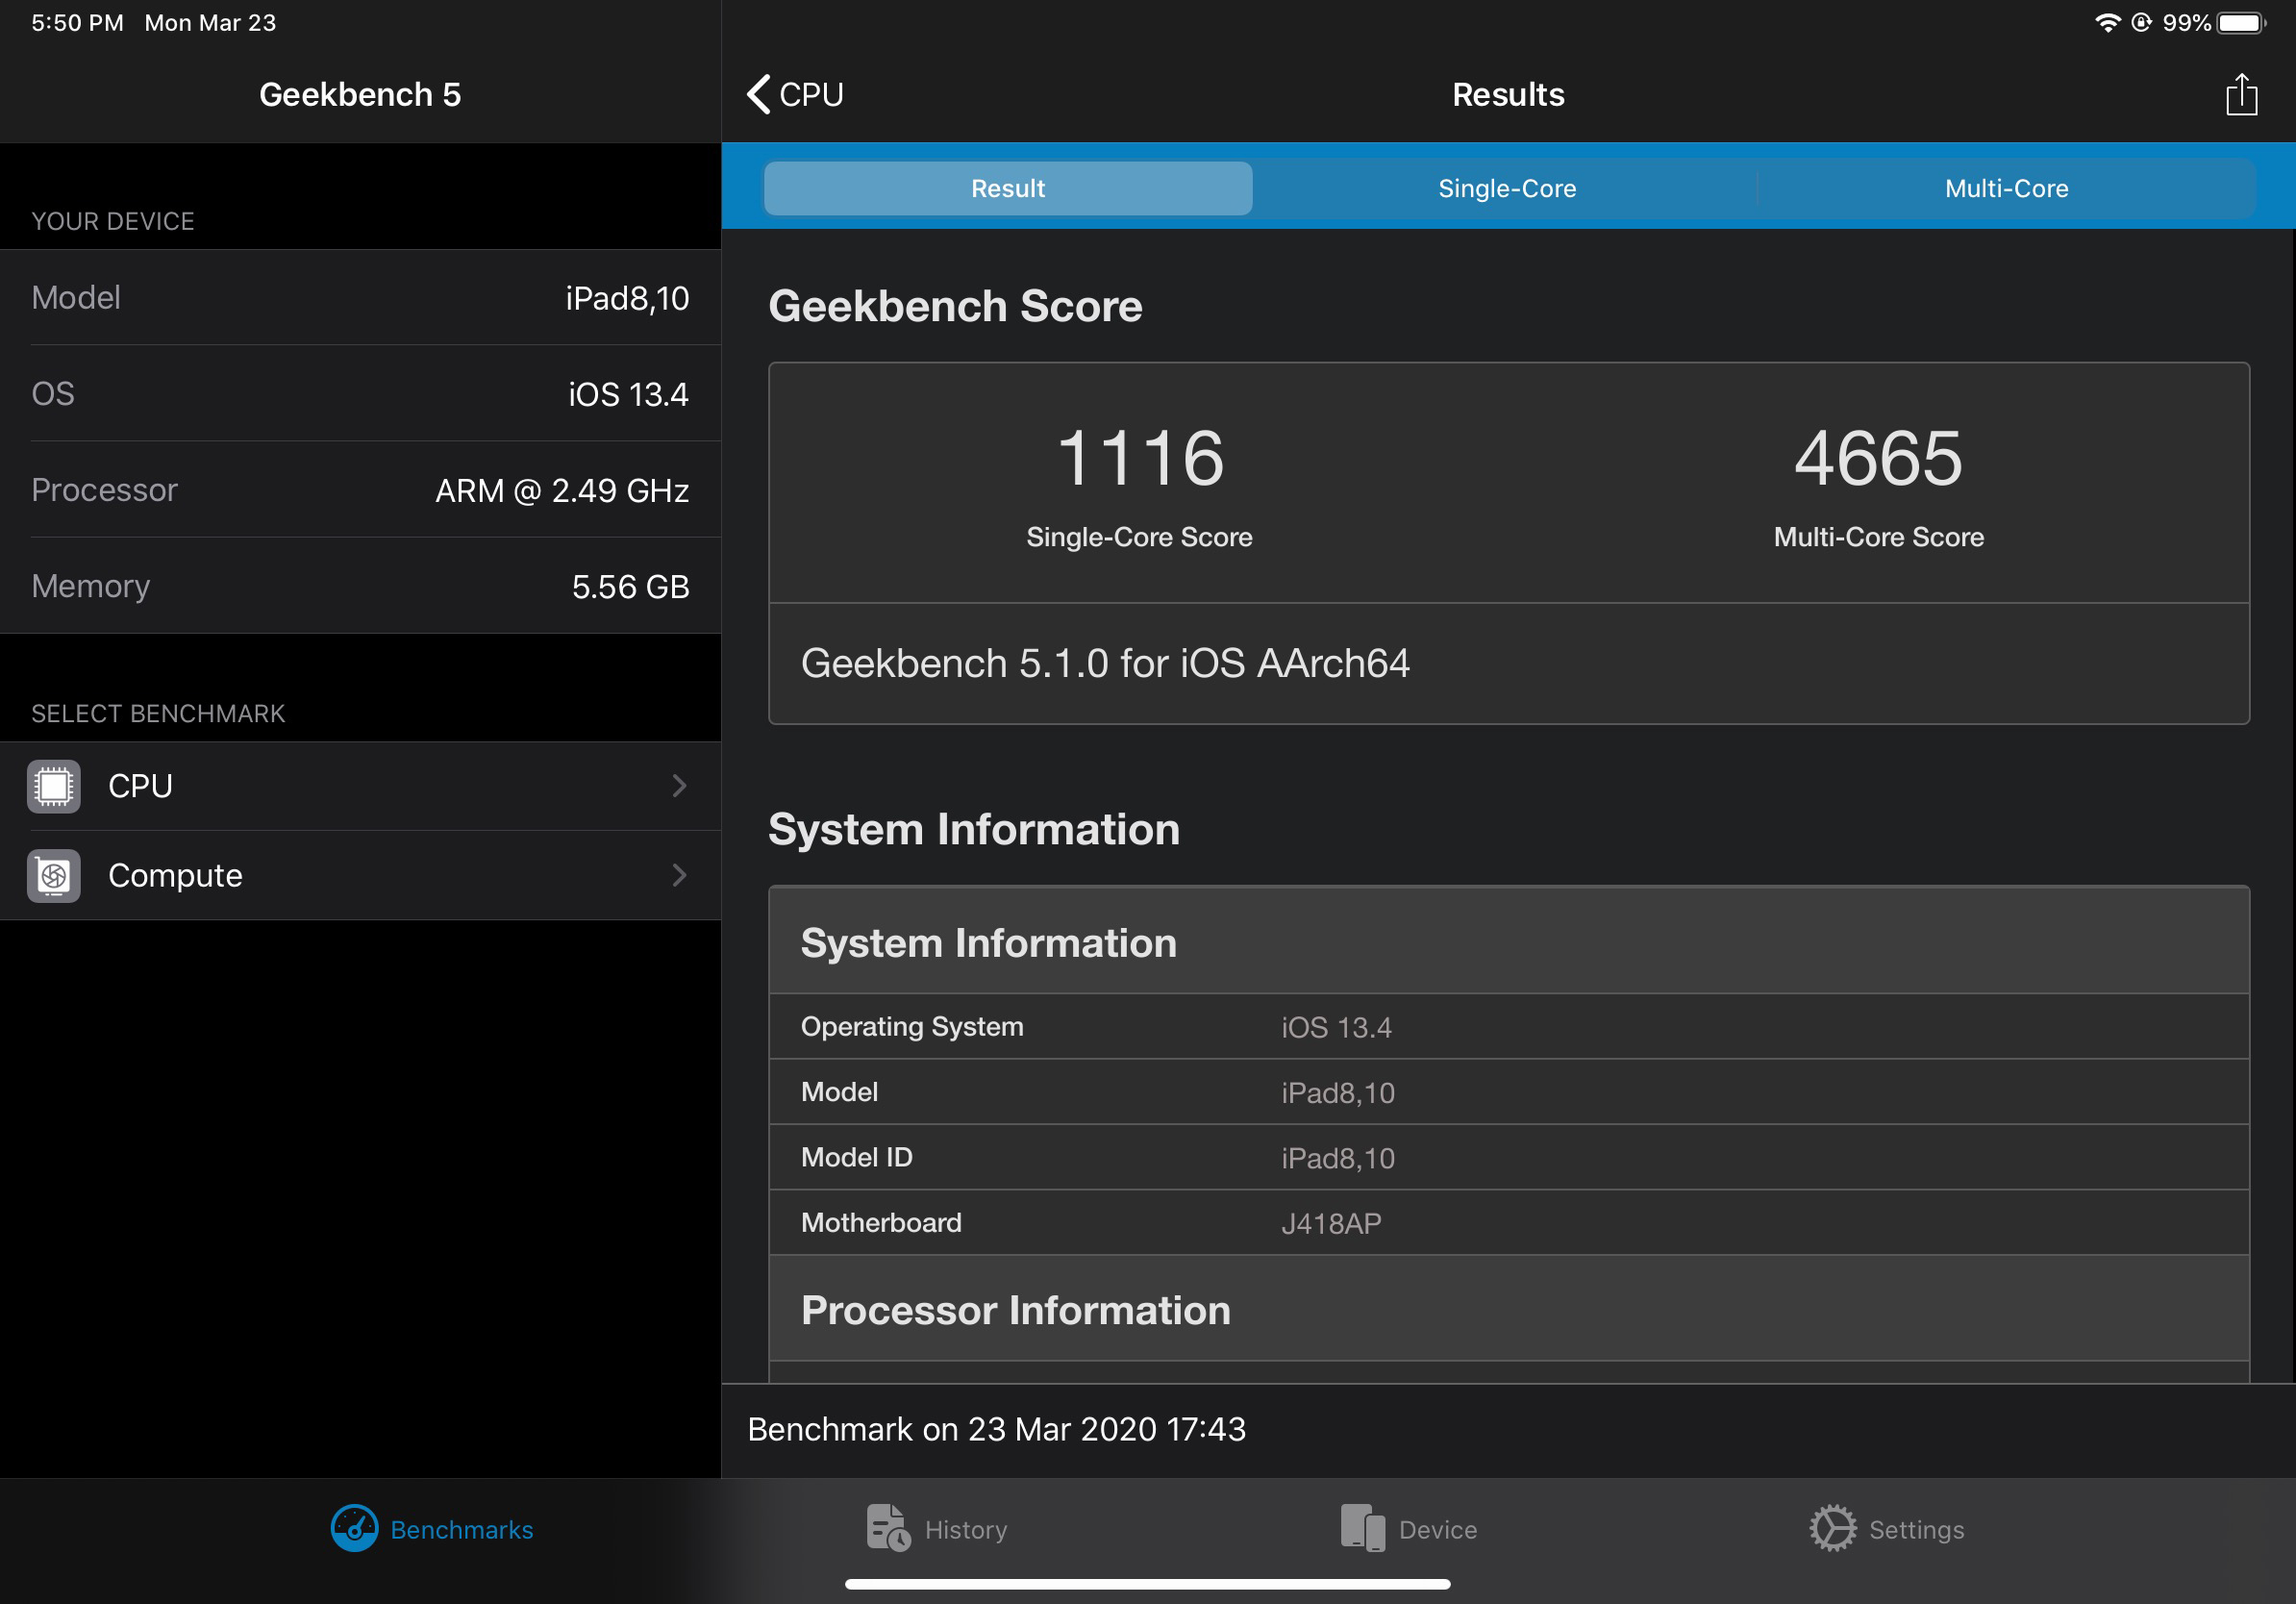 11-inch iPad Pro 2020 Geekbench score